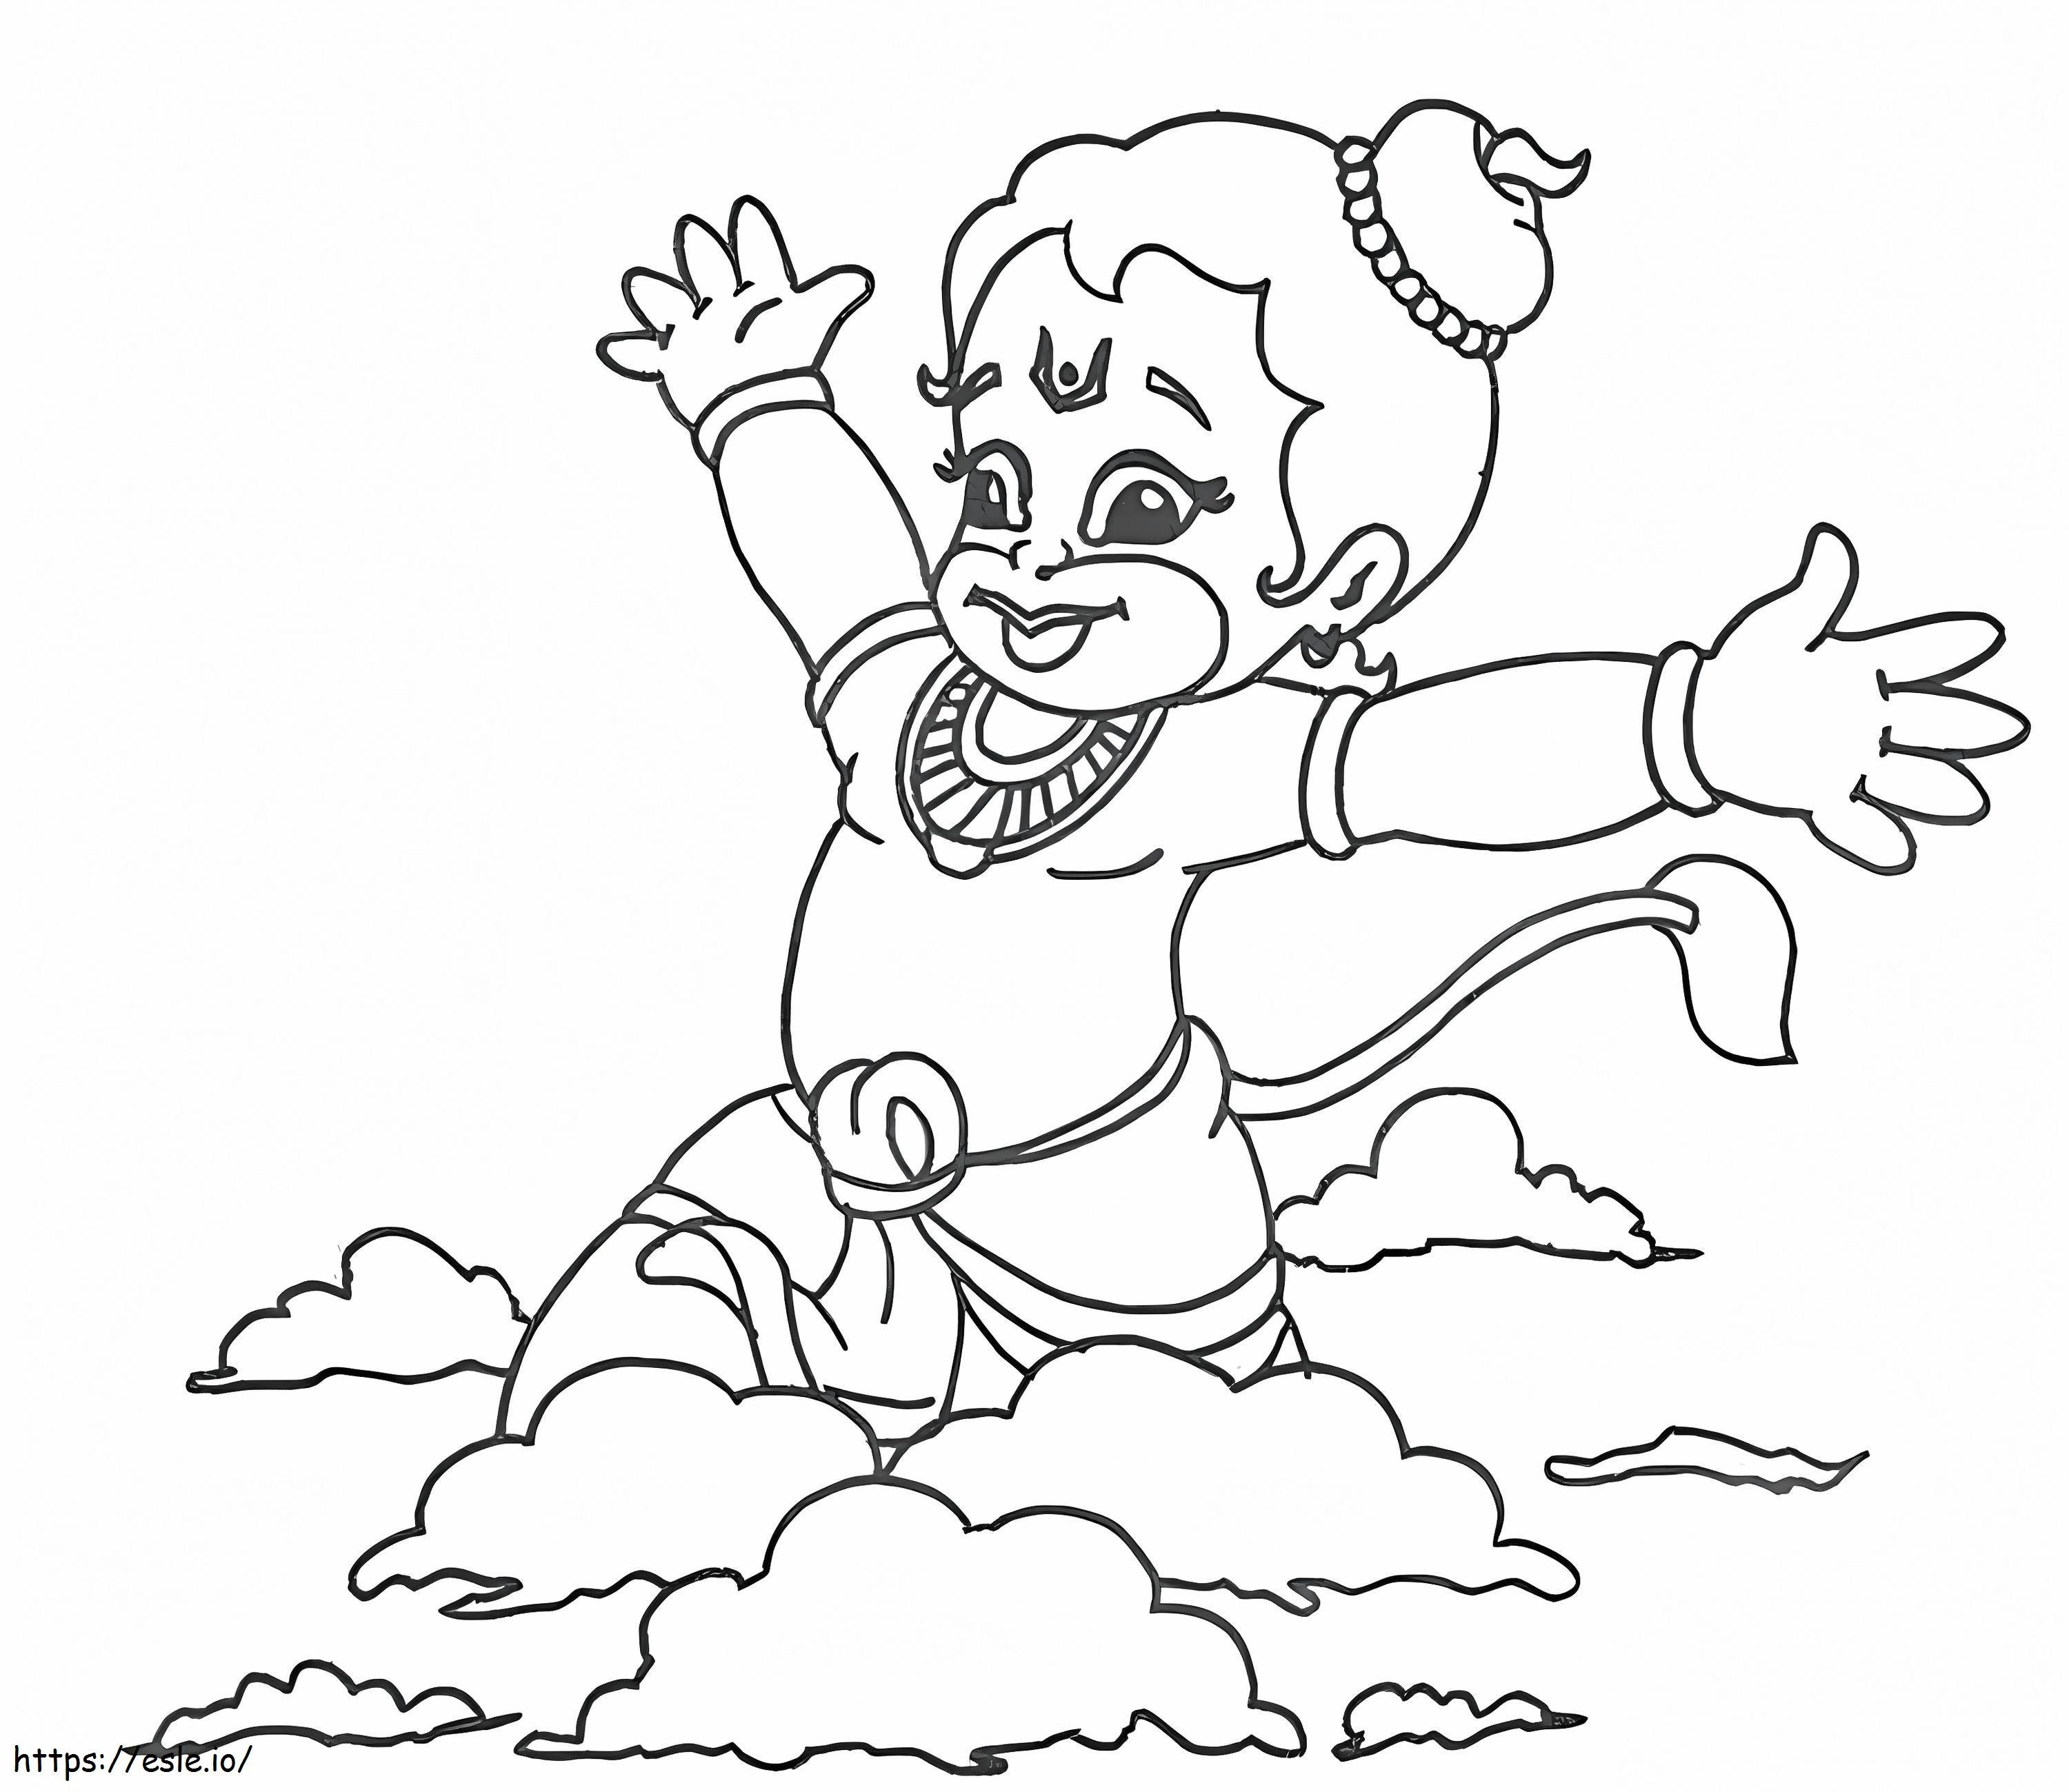 Hanuman Jayanti 1 coloring page